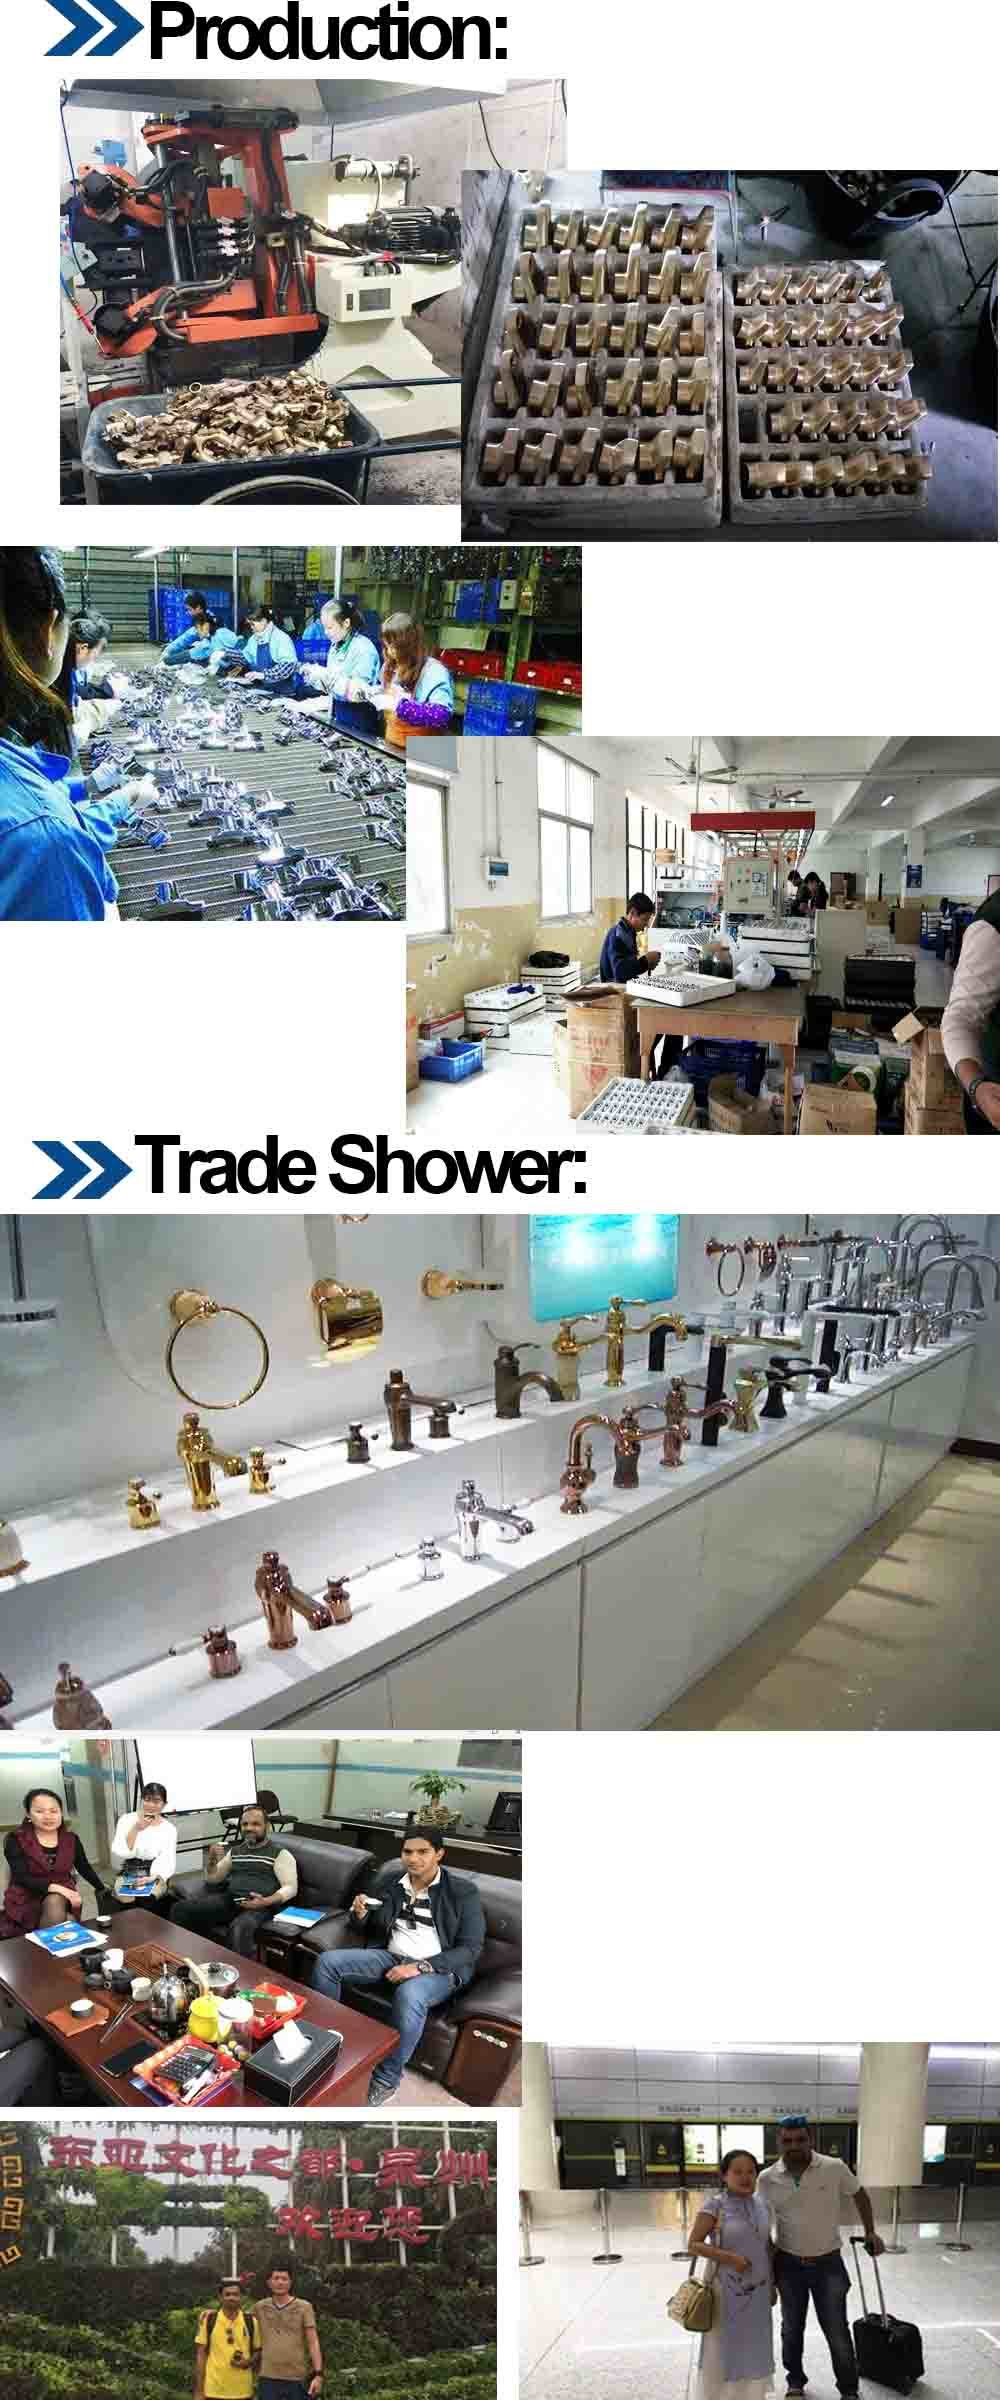 Shower Faucet, Factory, Manufactory, Certificate, Flexible Hose